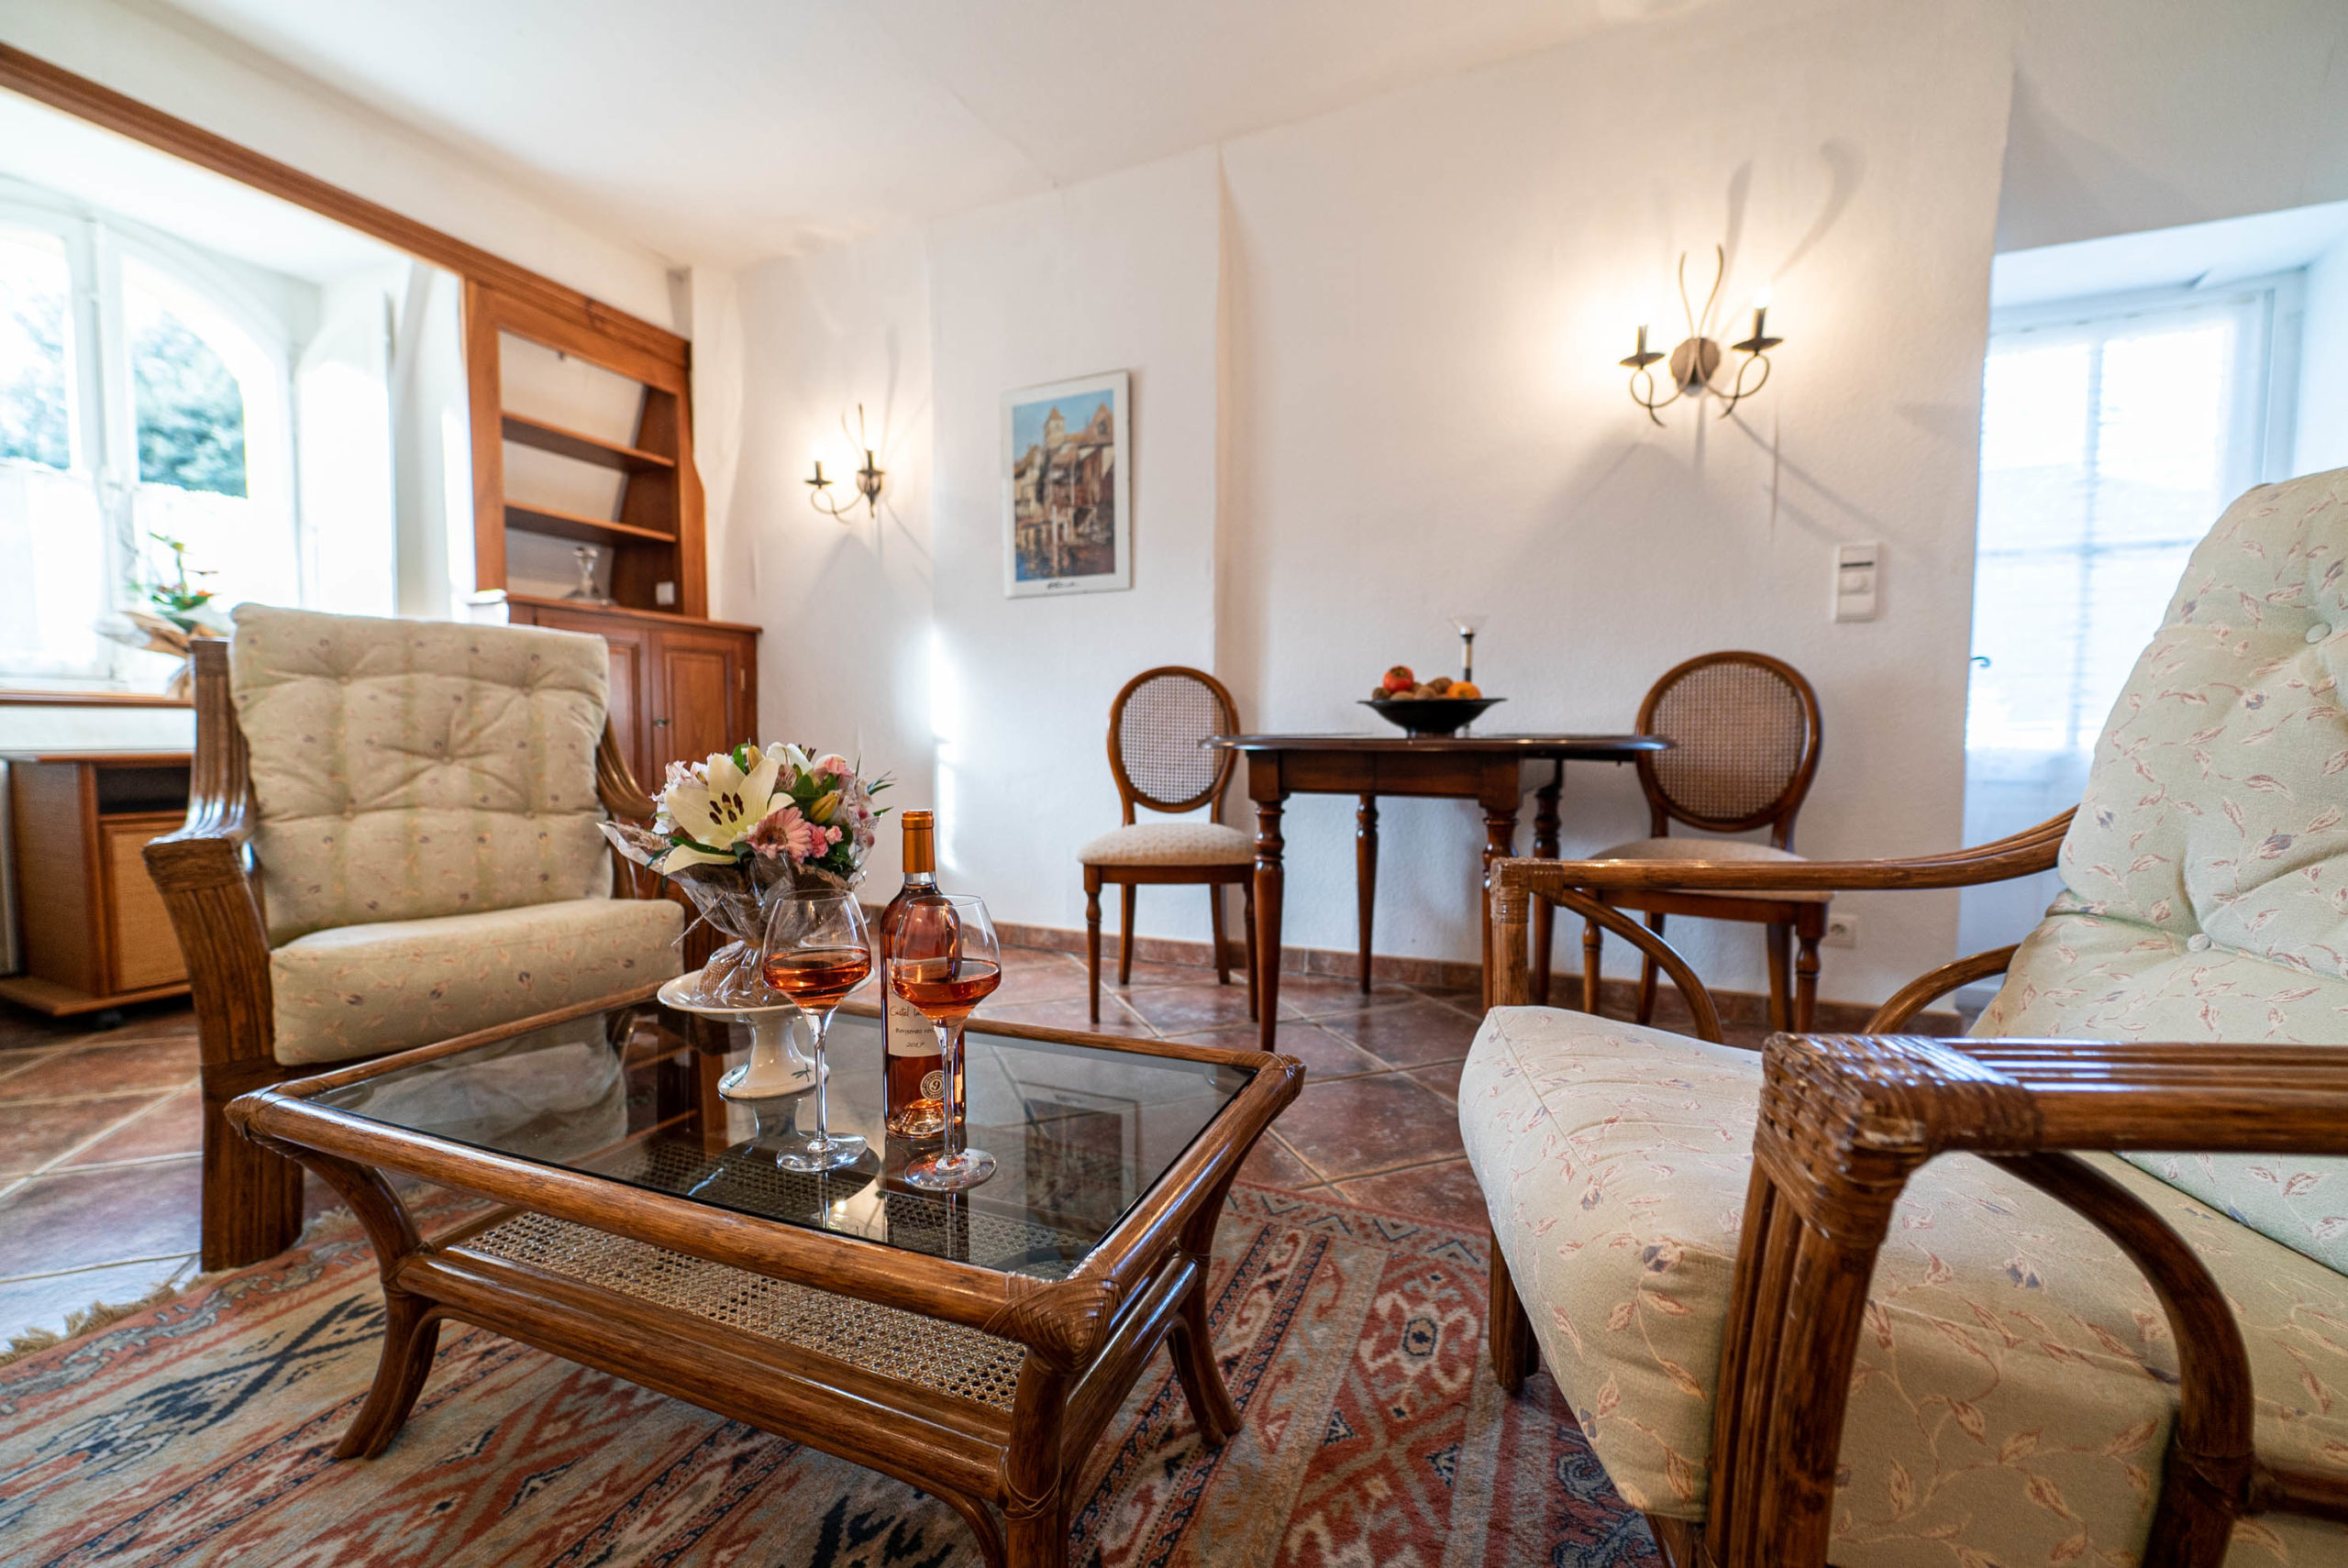 Salon suite nuptiale chateau Rauly location bergerac Monbazillac